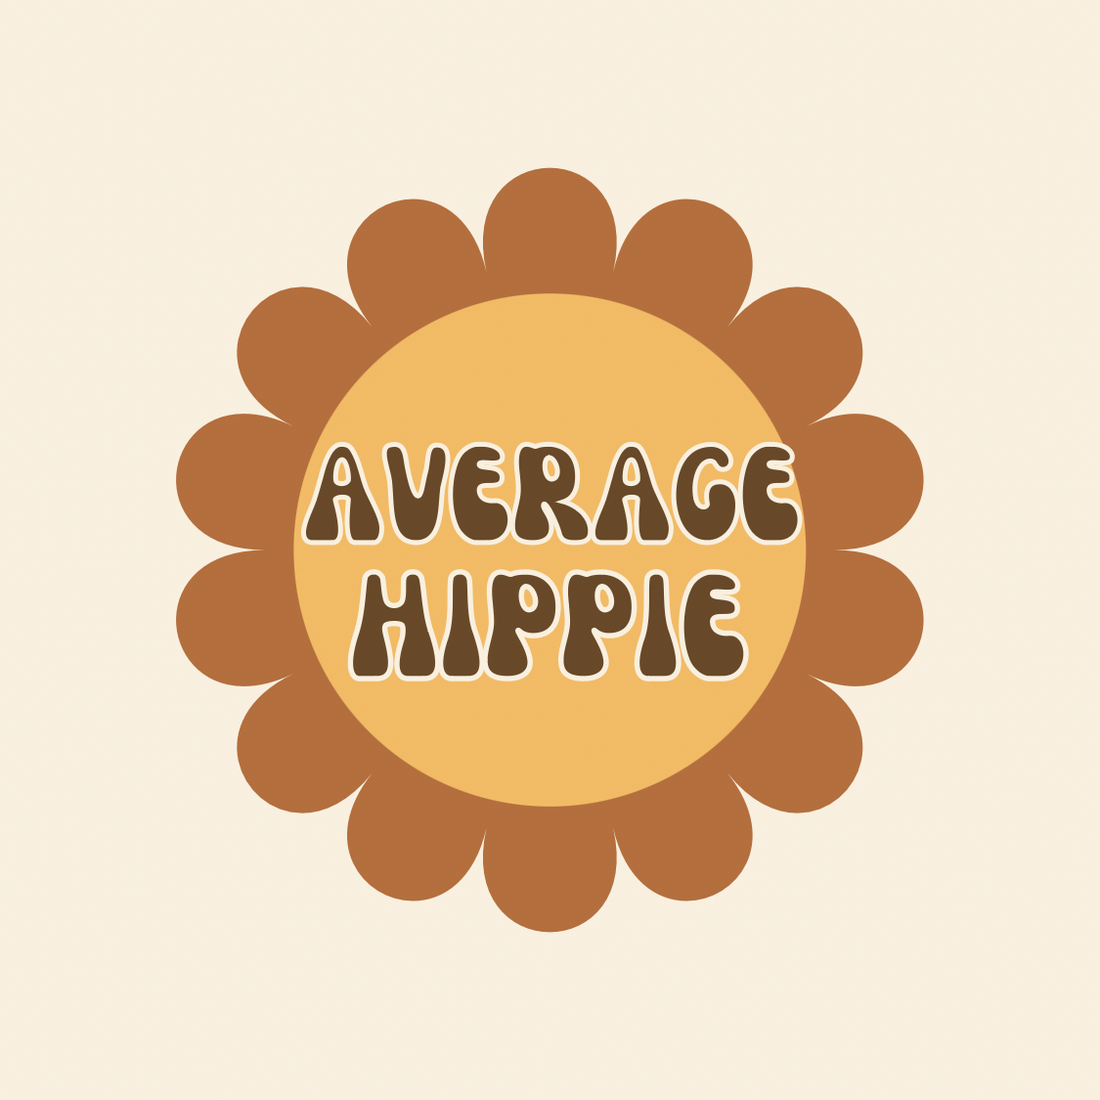 Why I Love Average Hippie